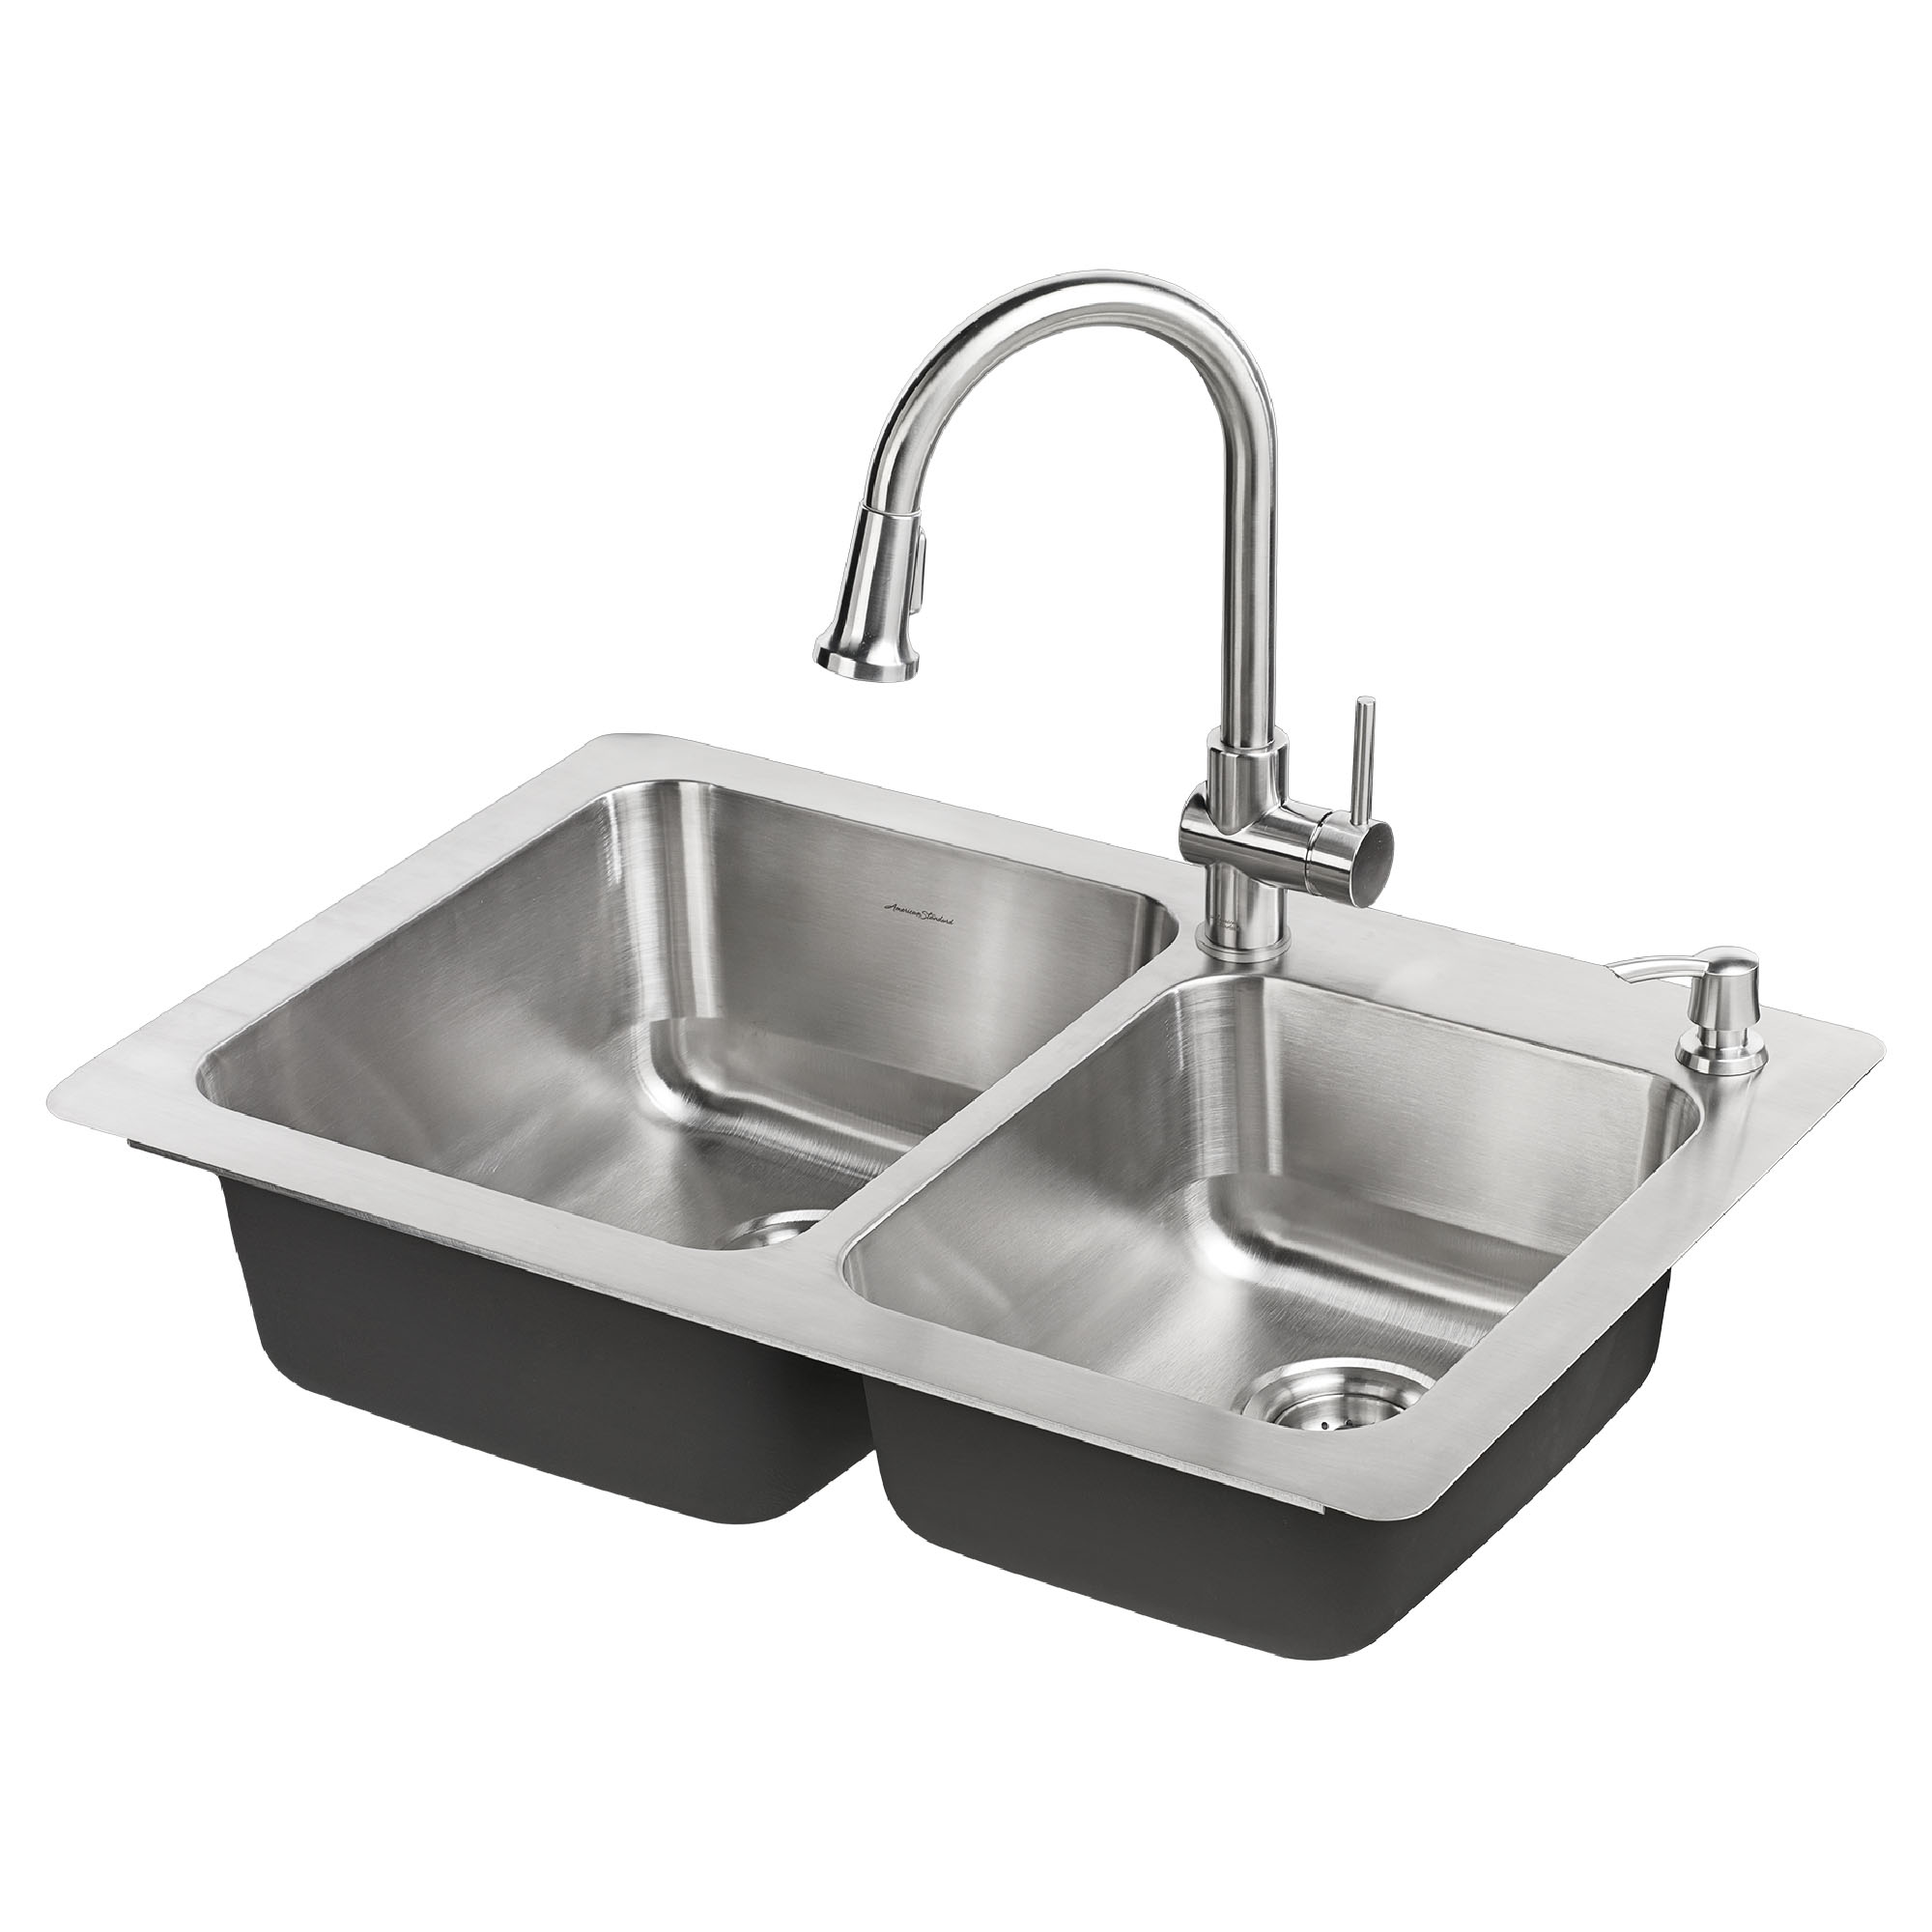 Double Bowl Kitchen Sink Kit